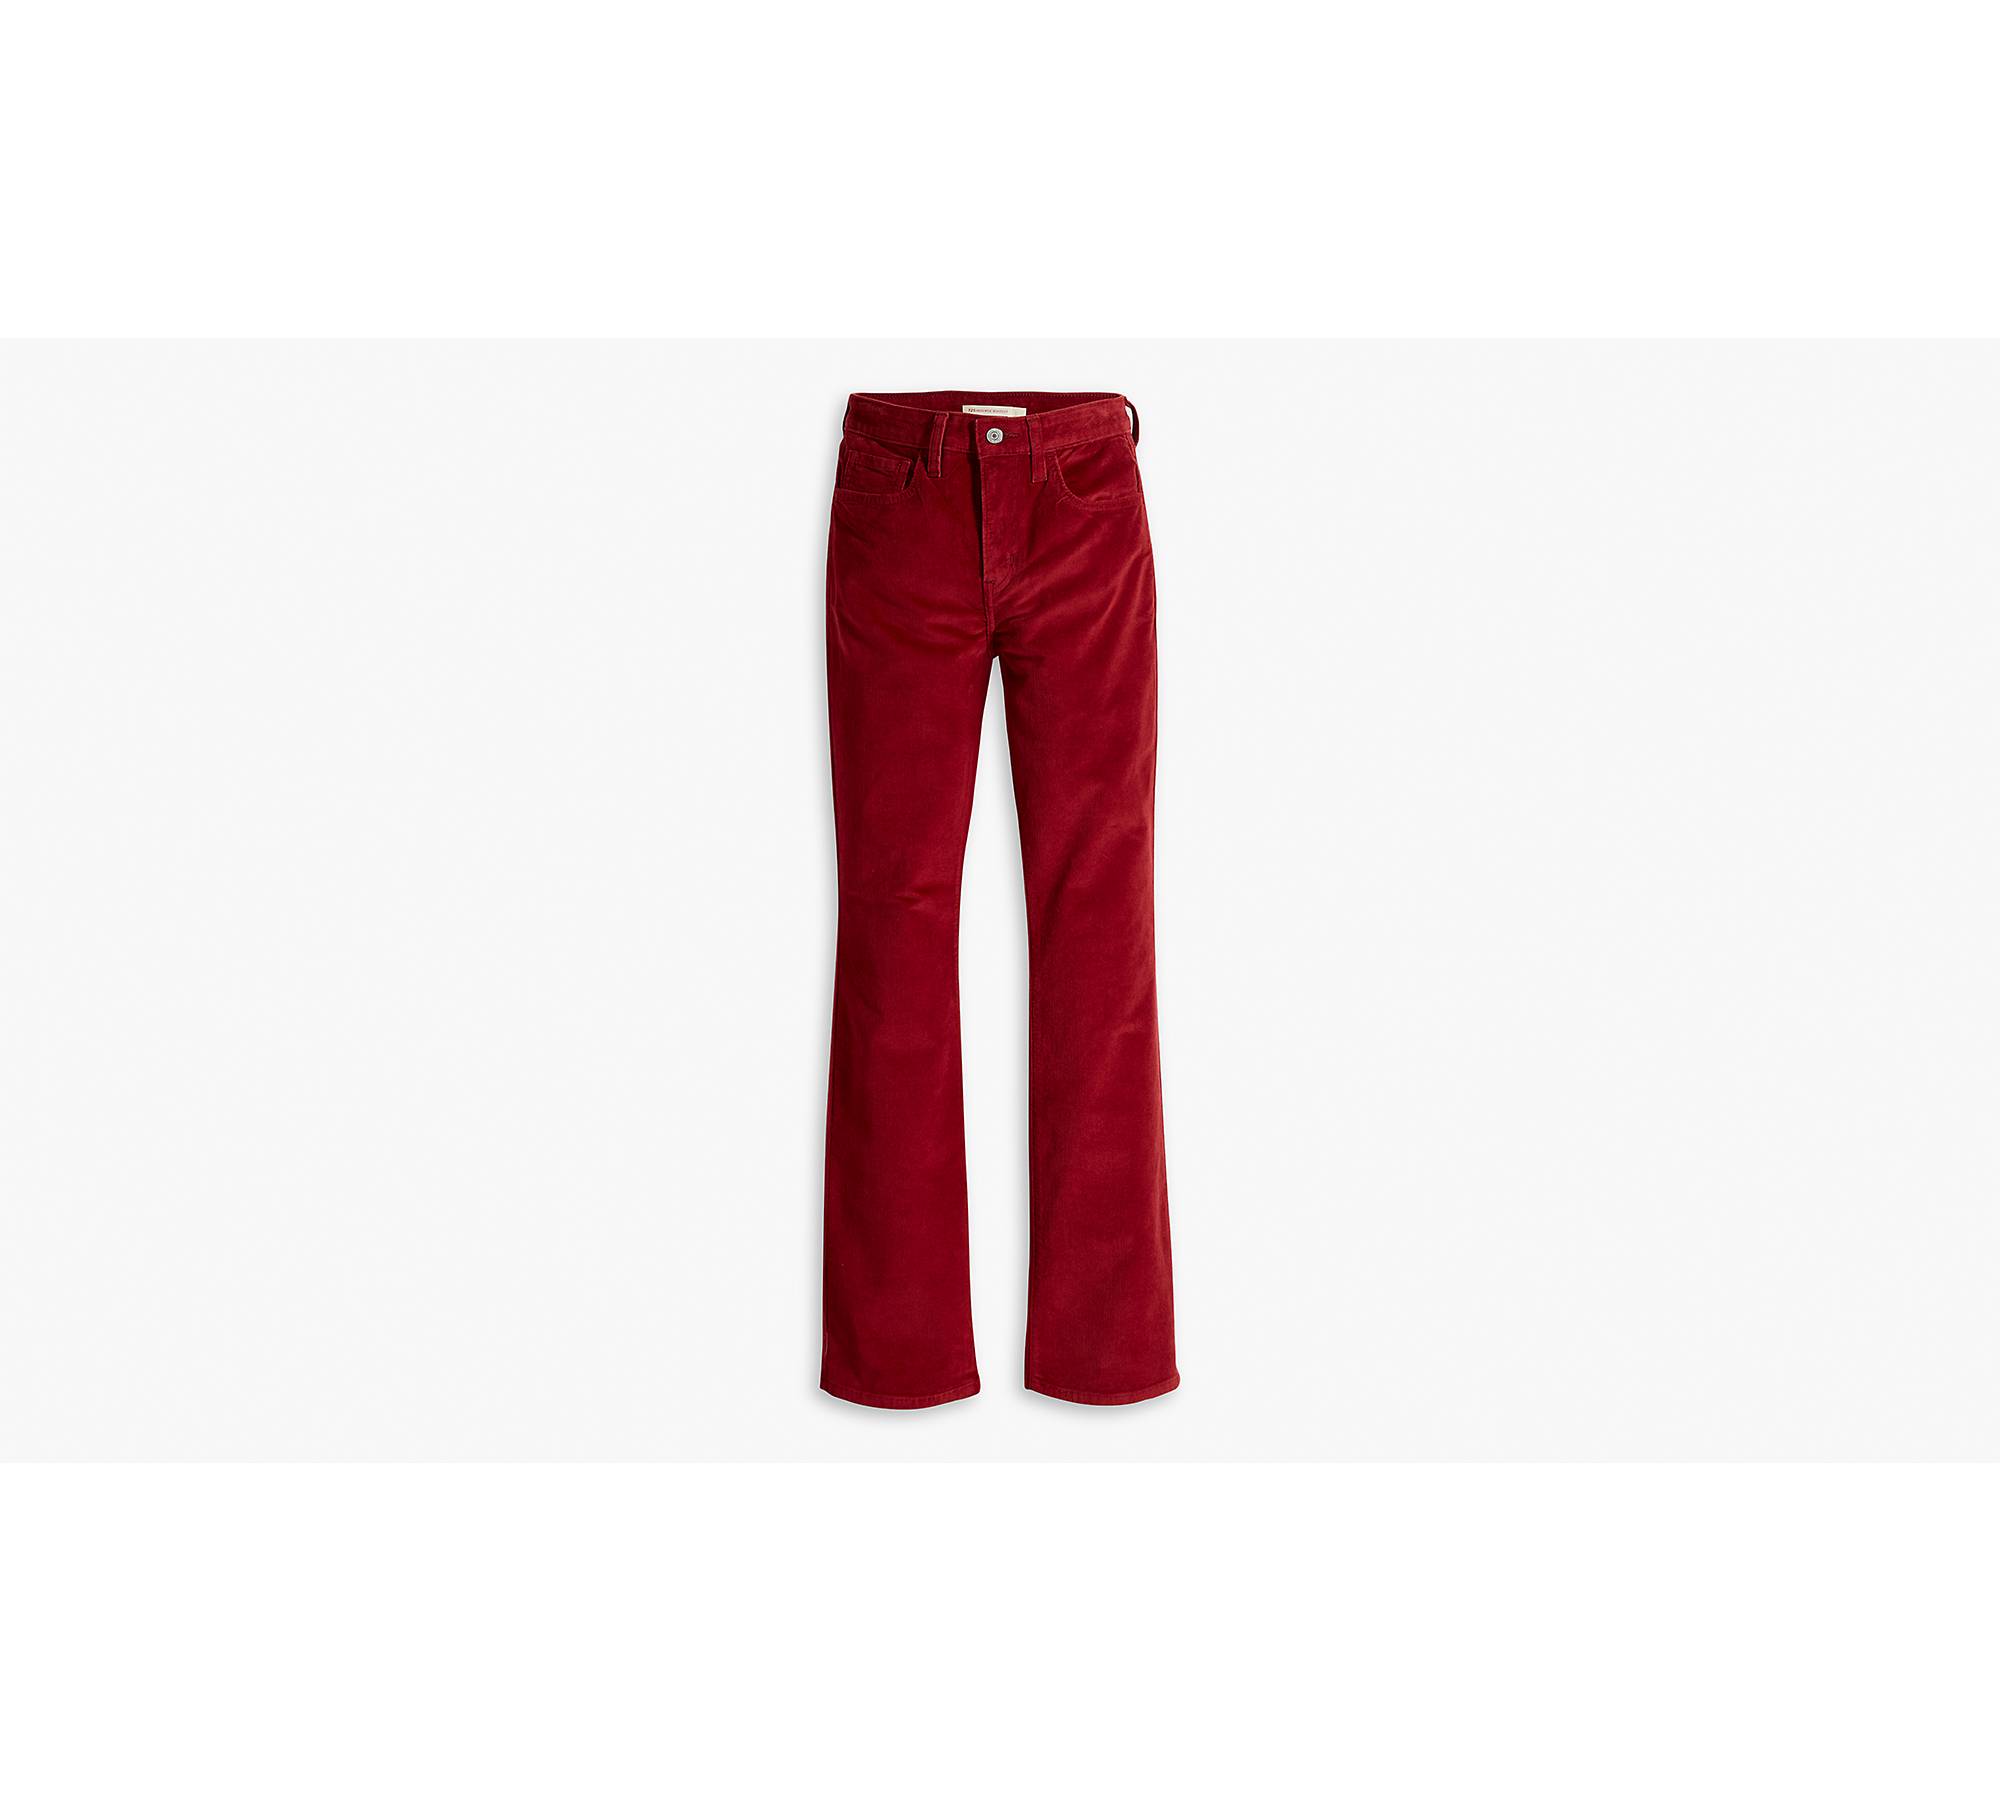 ASEIDFNSA Red Shorts for Women Womens Bodysuit Short Sleeve Denim Waist  Short Fashion High Slim Jeans Women Regular Tassel Pants Pants 